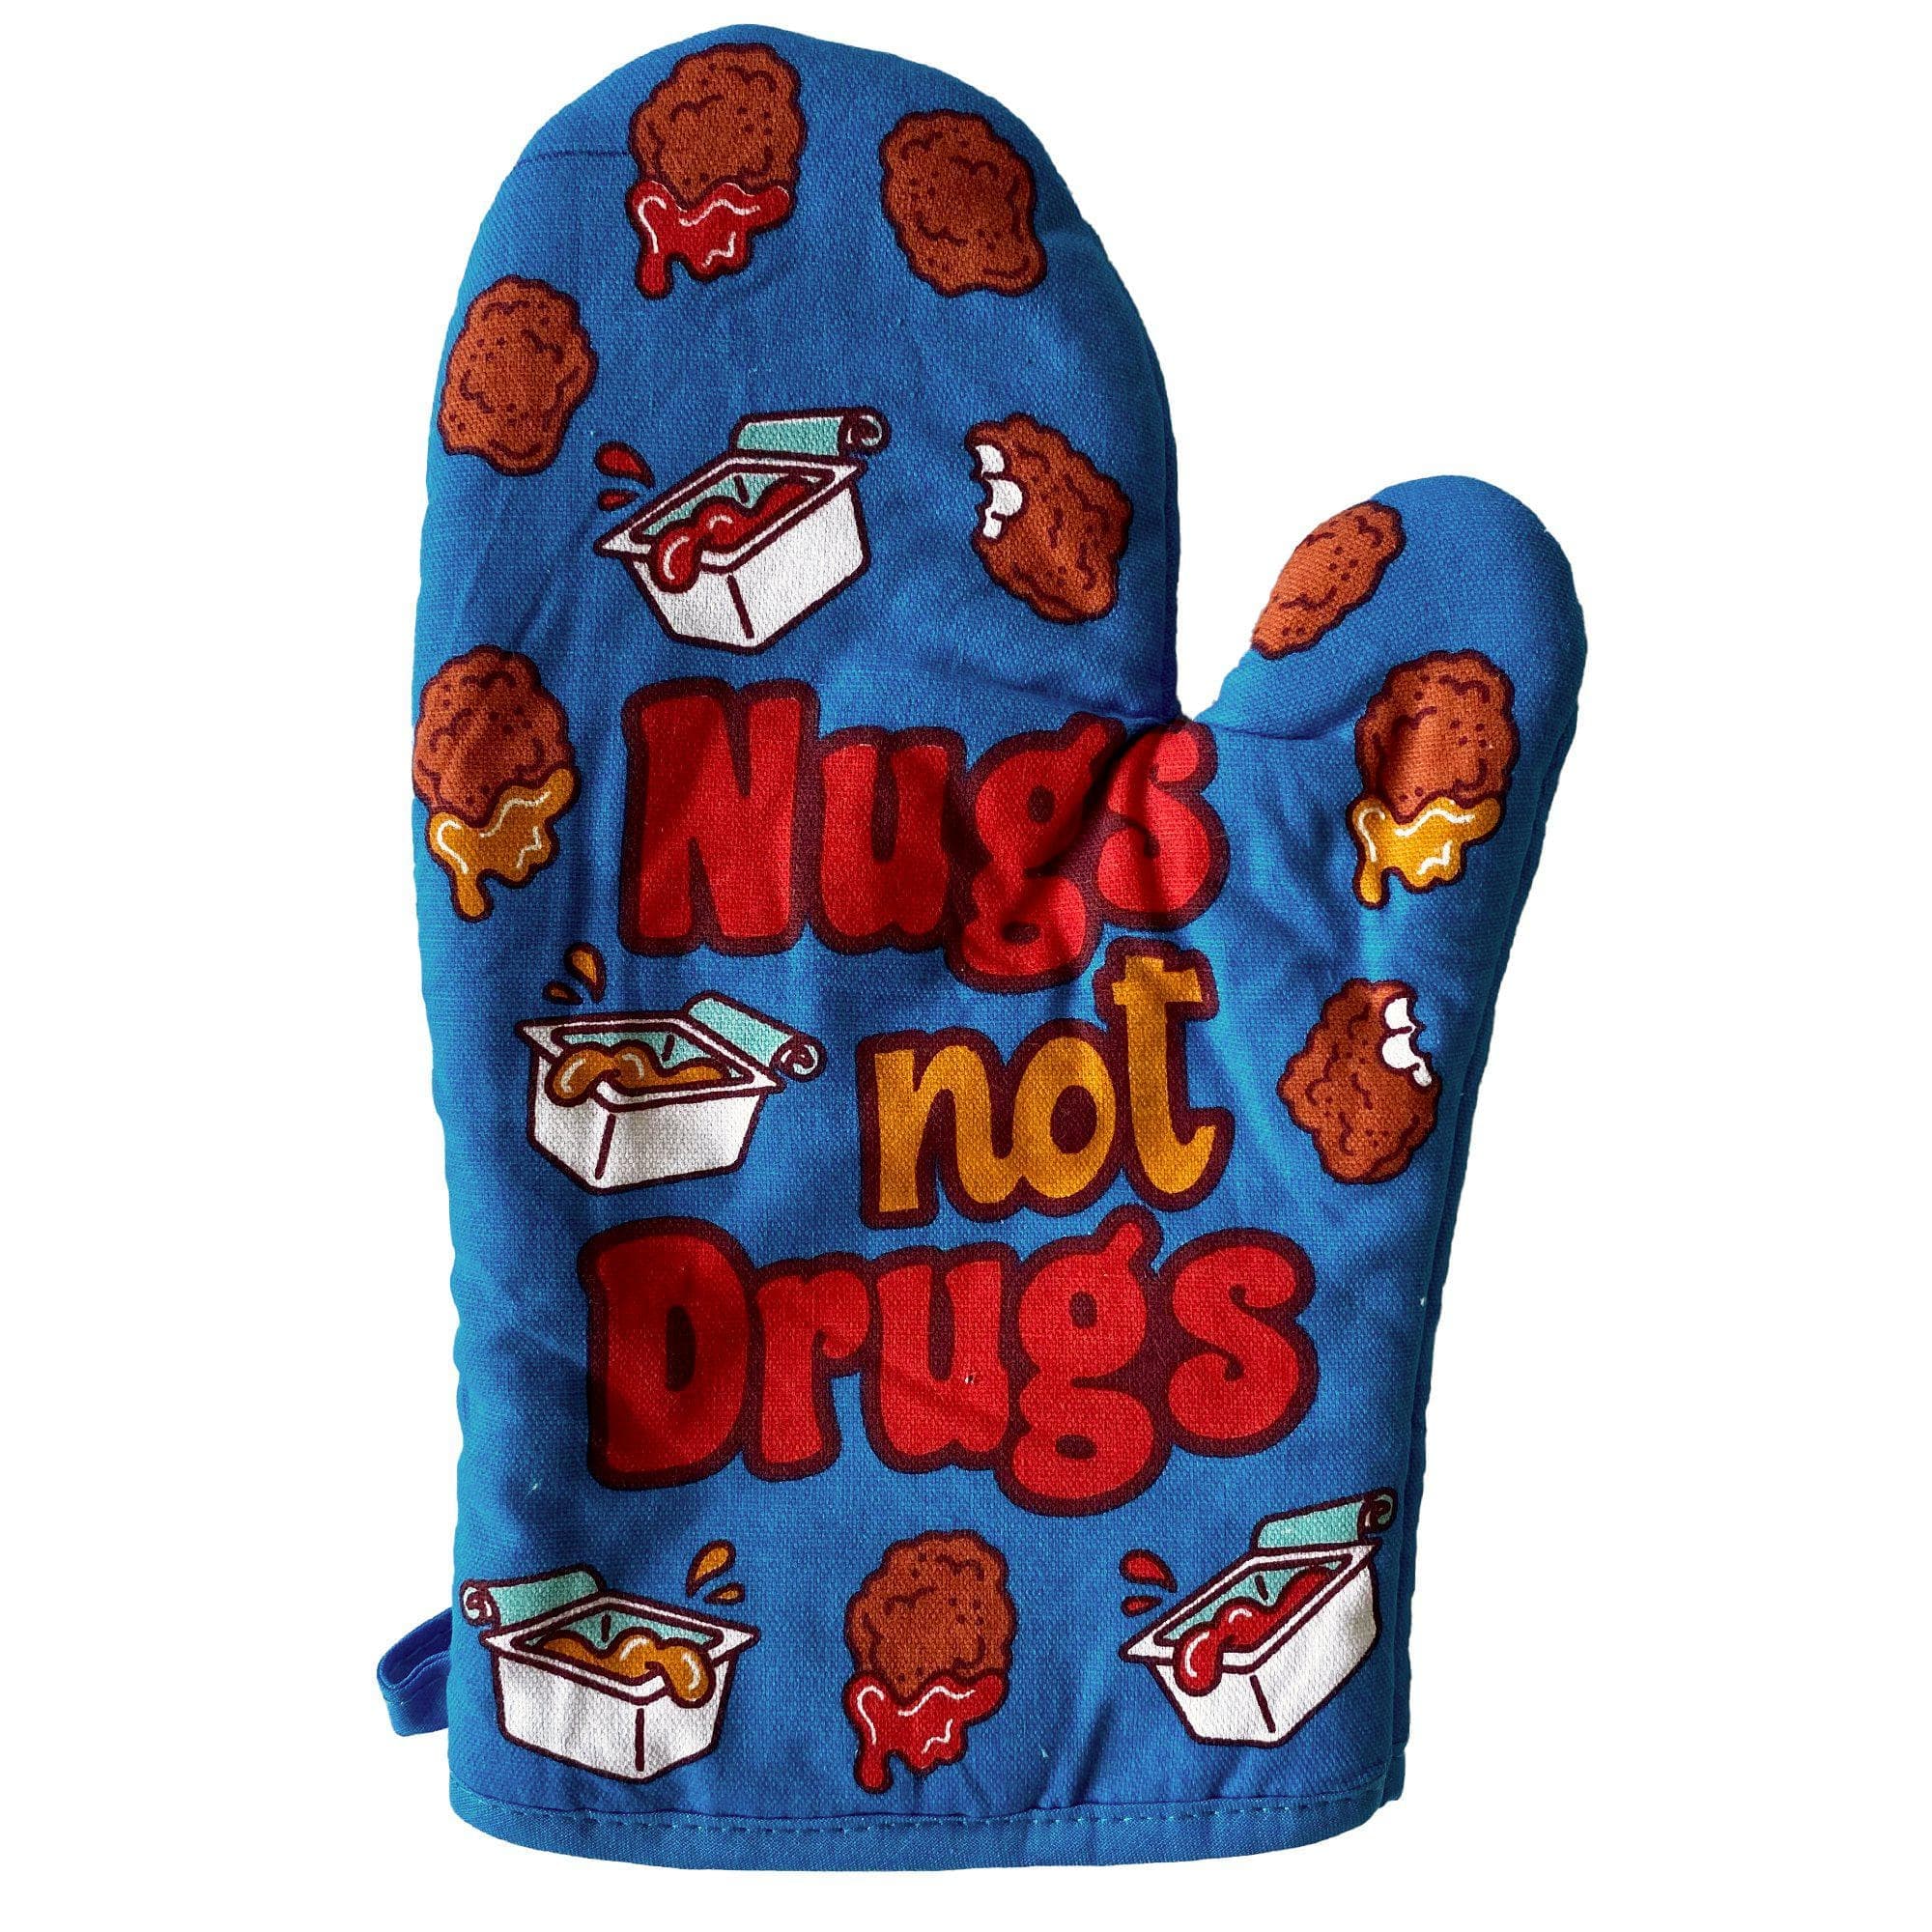 Nugs Not Drugs - Crazy Dog T-Shirts